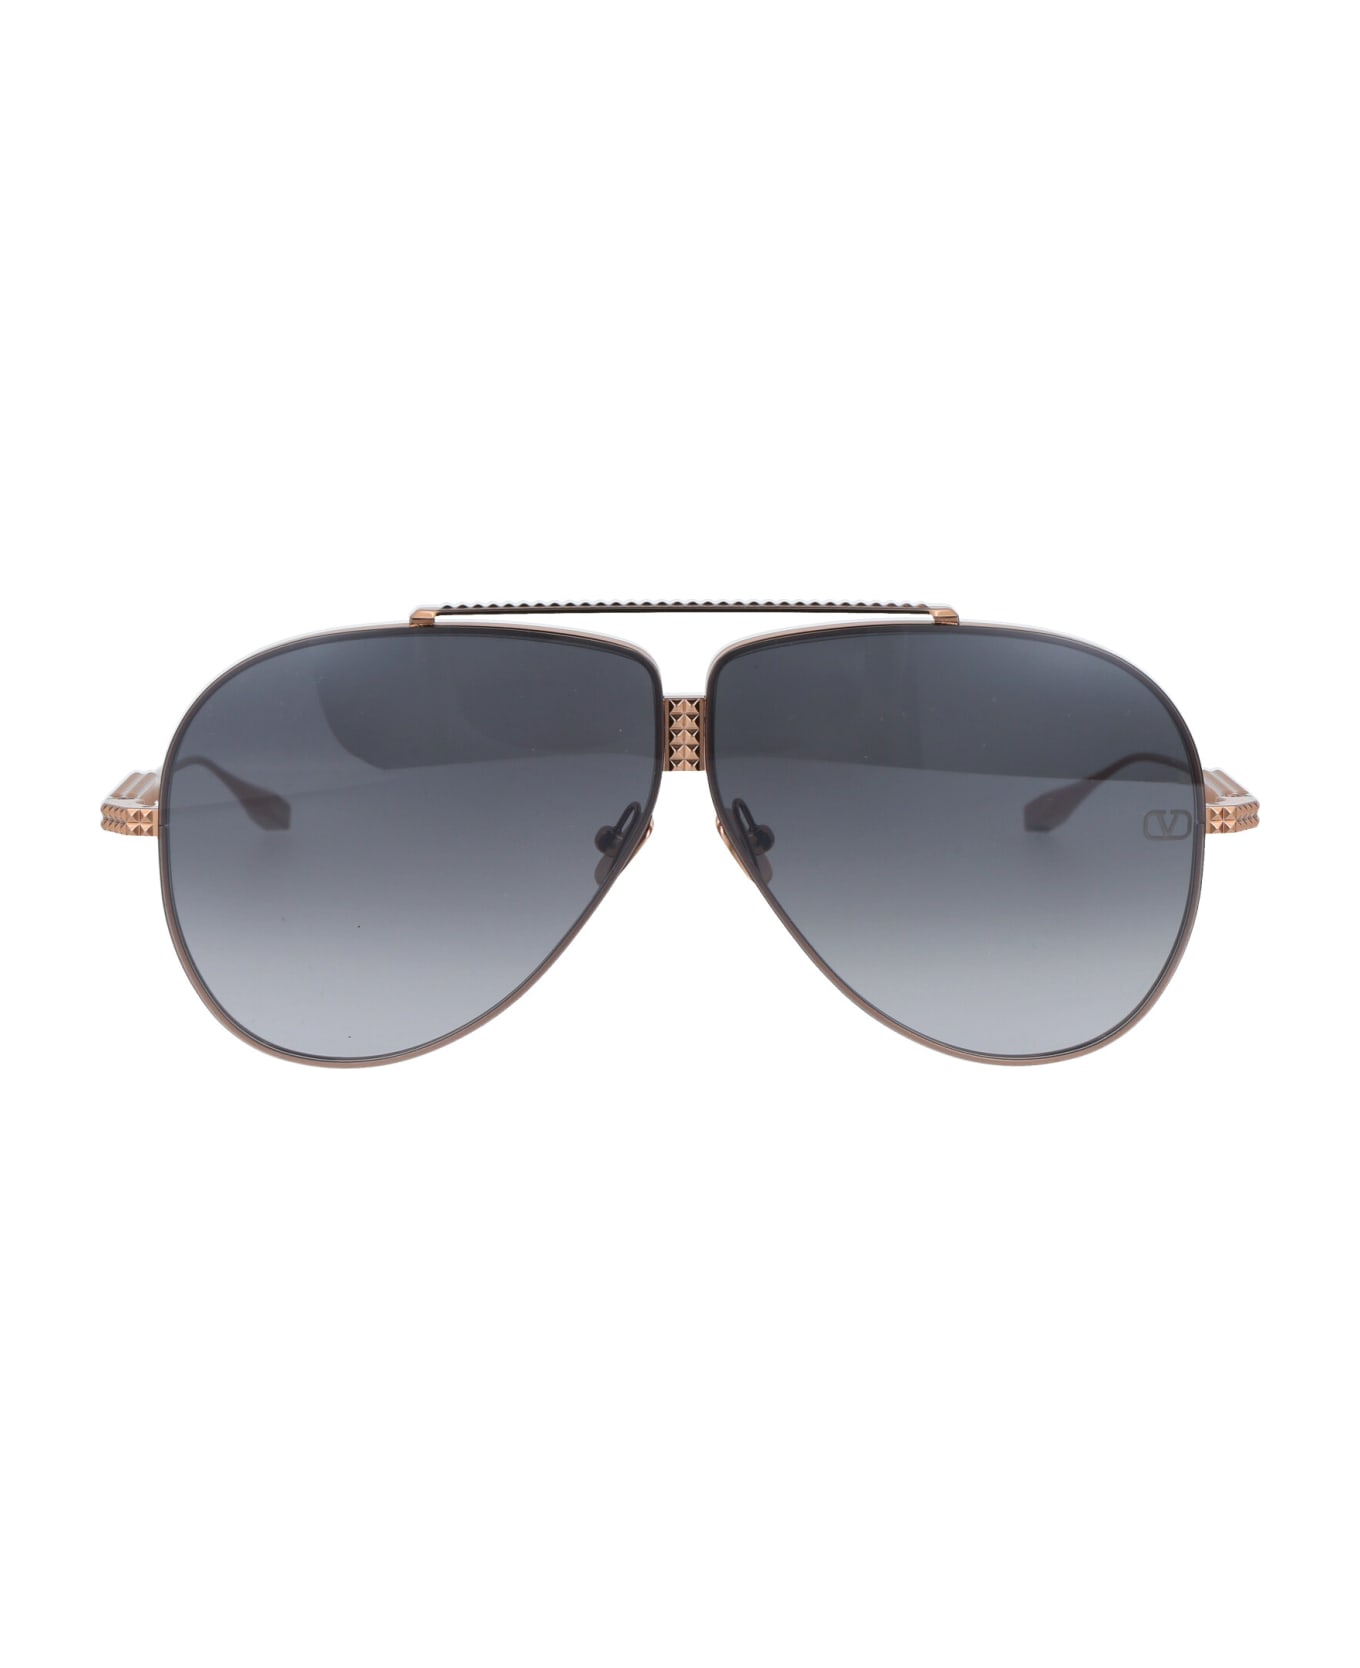 Valentino Eyewear Xvi Sunglasses - ROSE GOLD W/ DARK GREY BLACK FLASH MIRROR